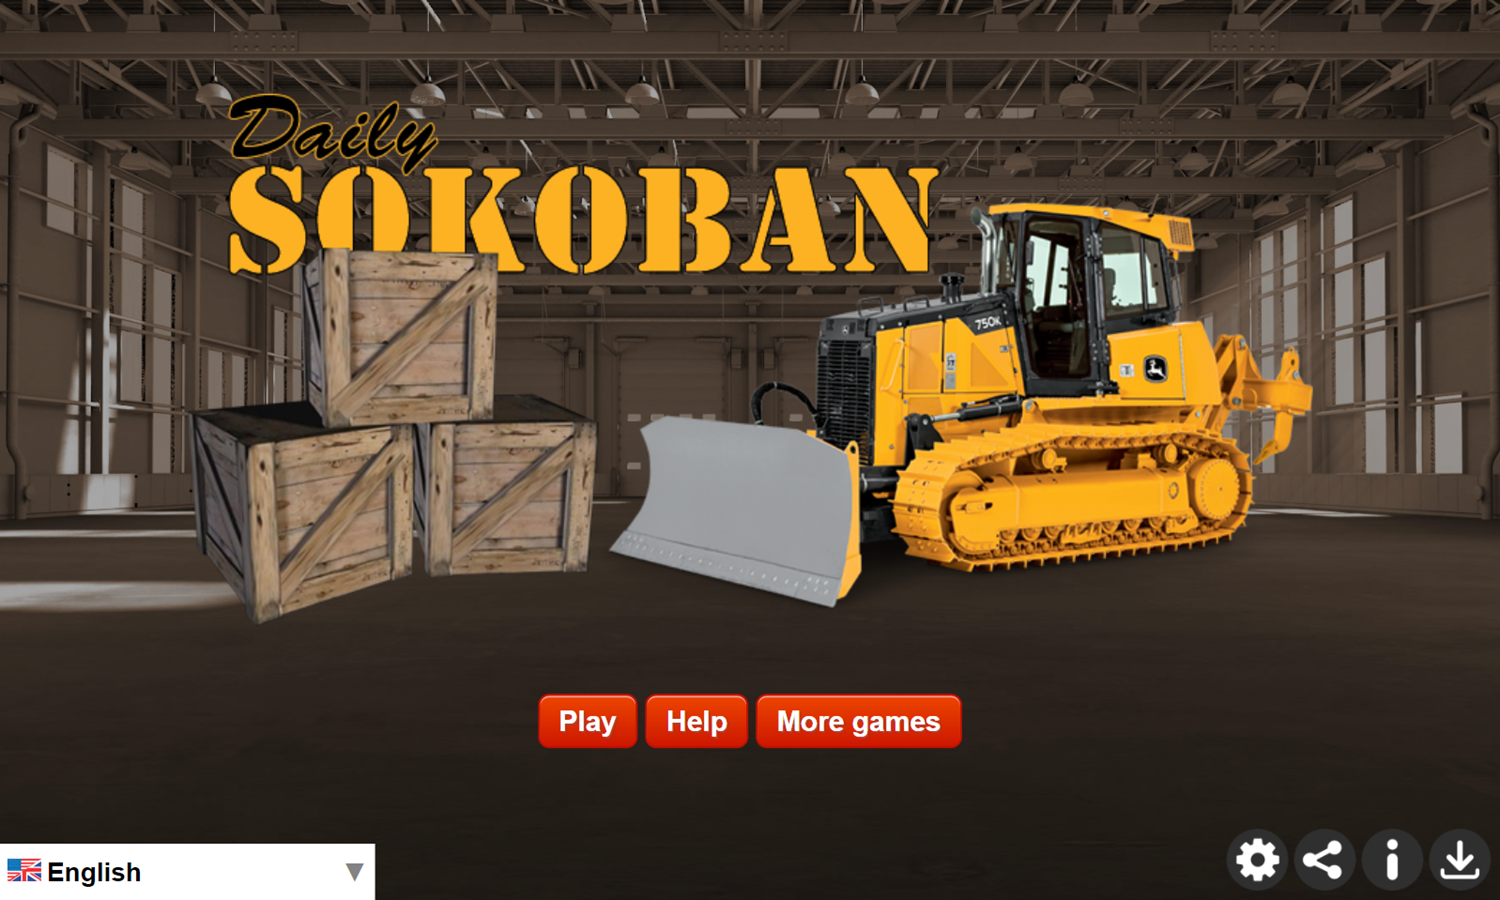 Daily Sokoban Game Welcome Screen Screenshot.